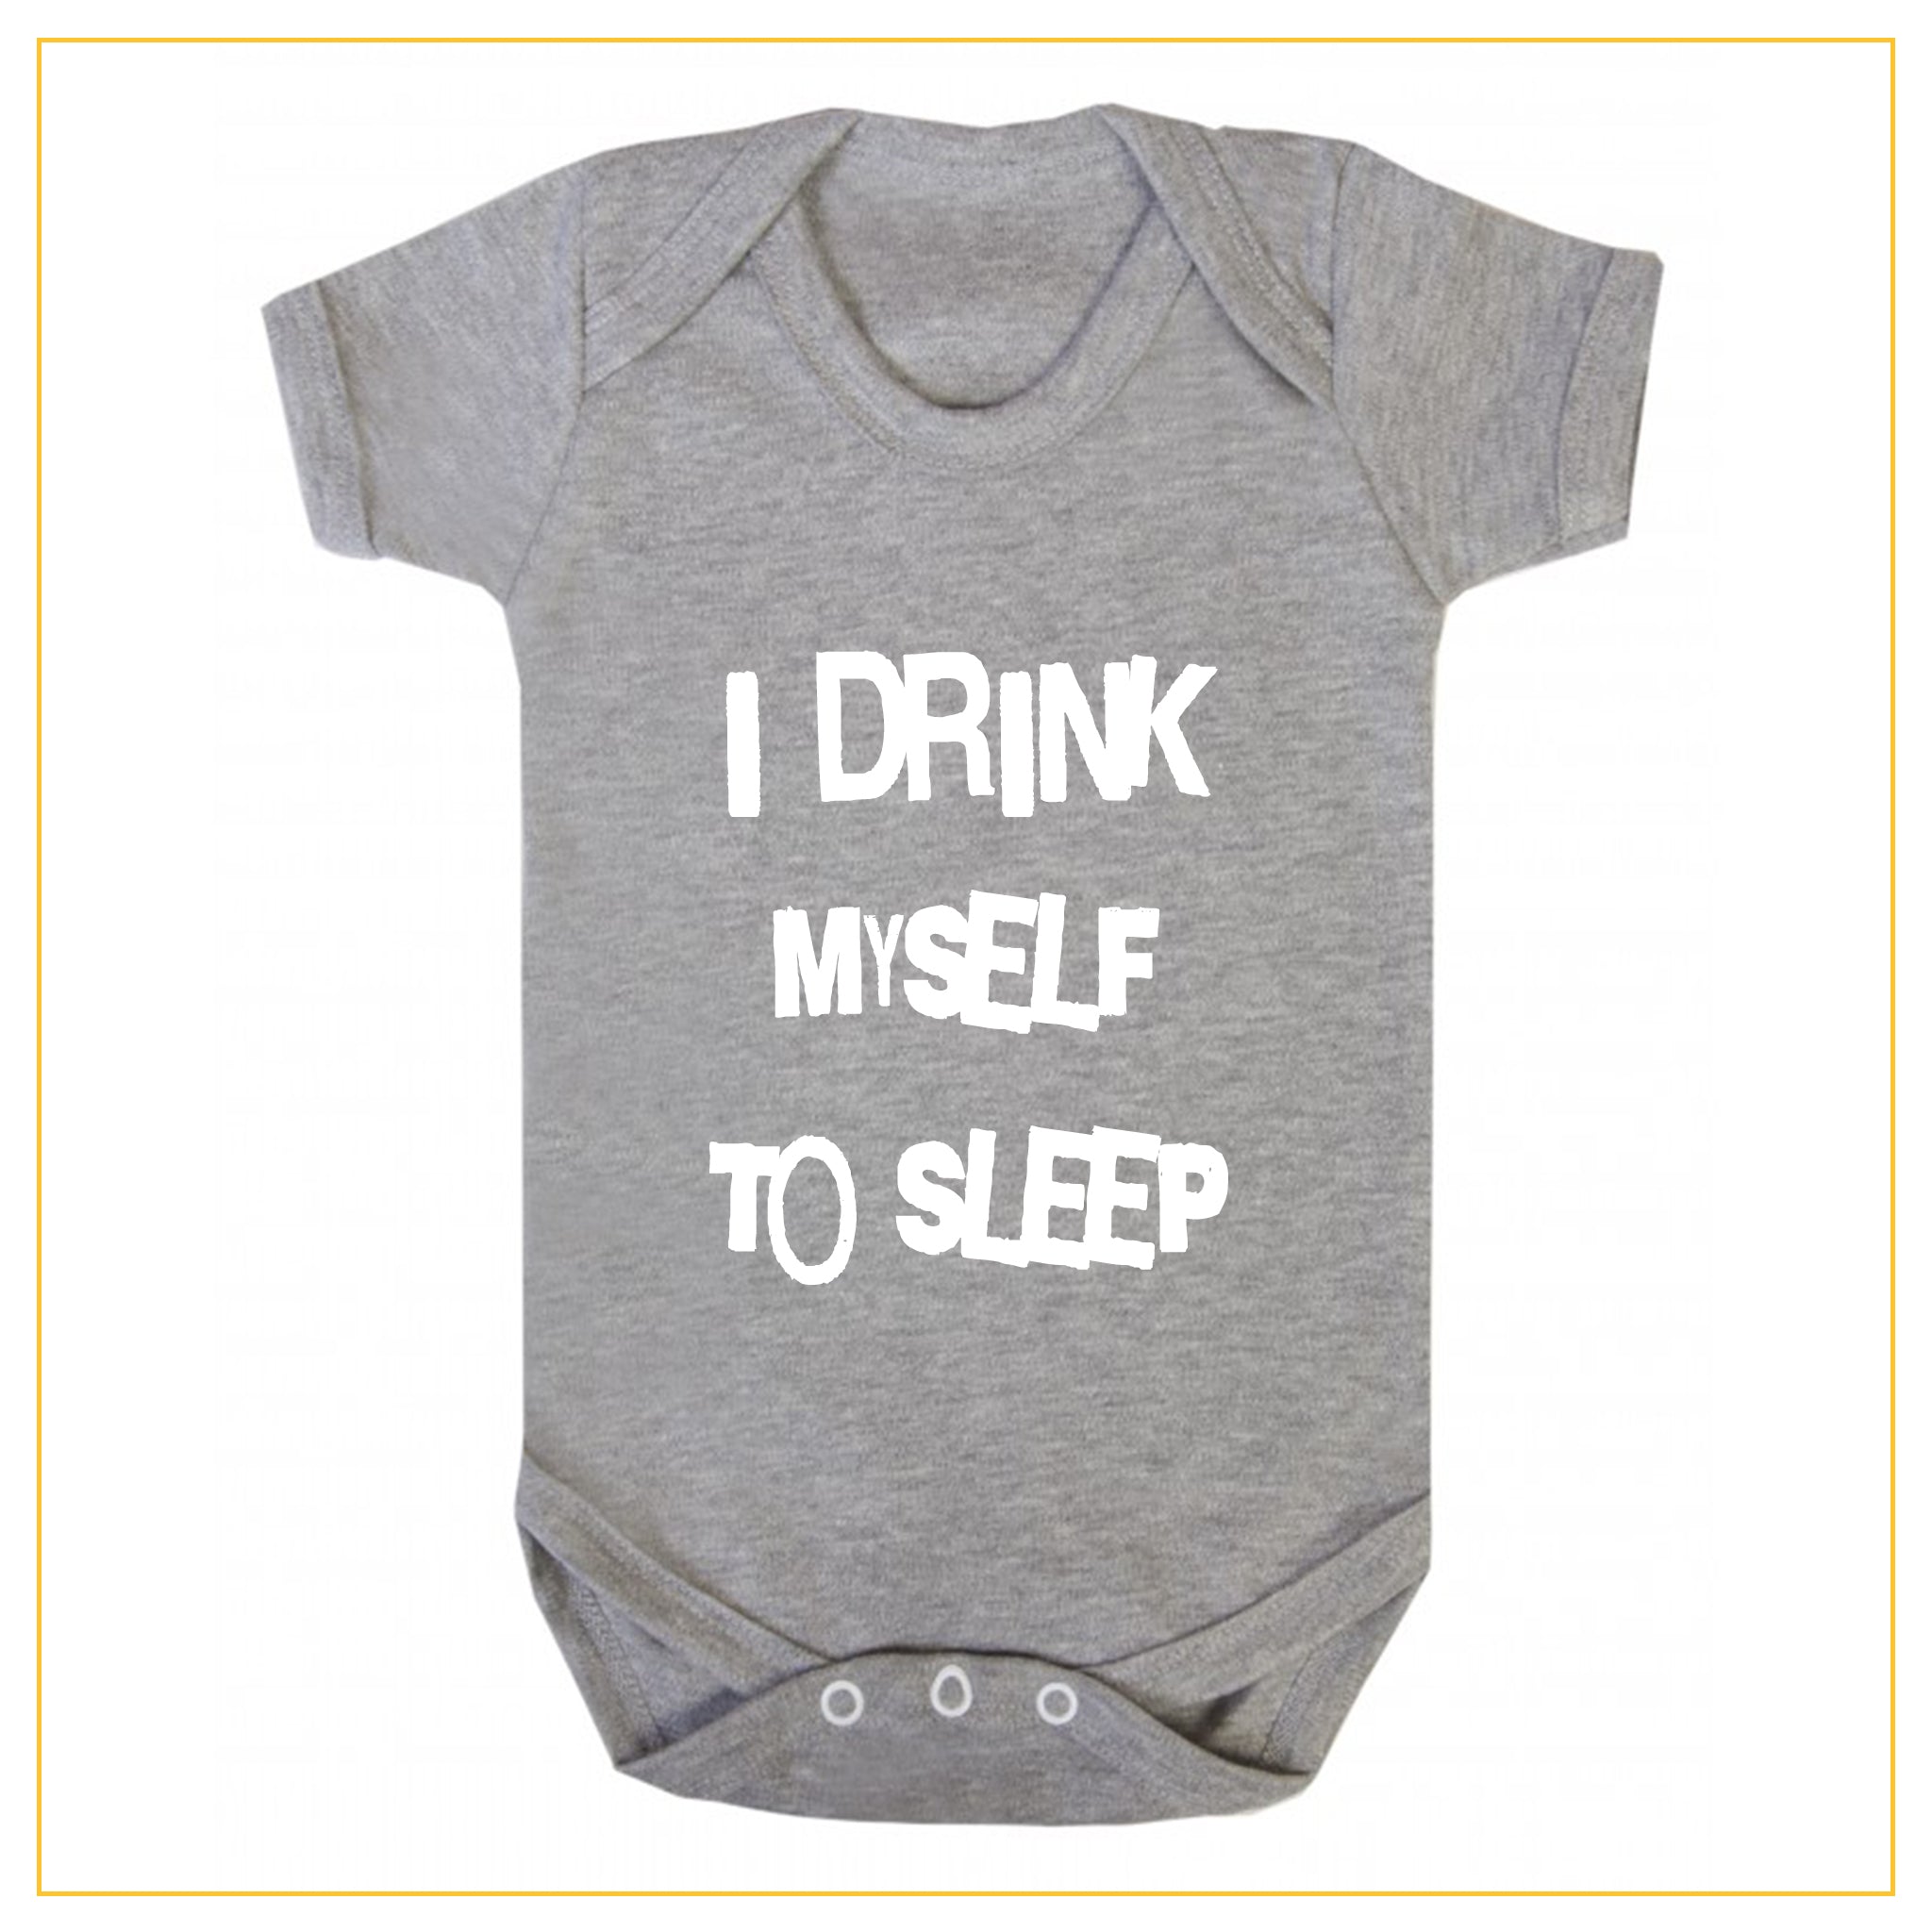 I drink myself to sleep baby onesie in grey